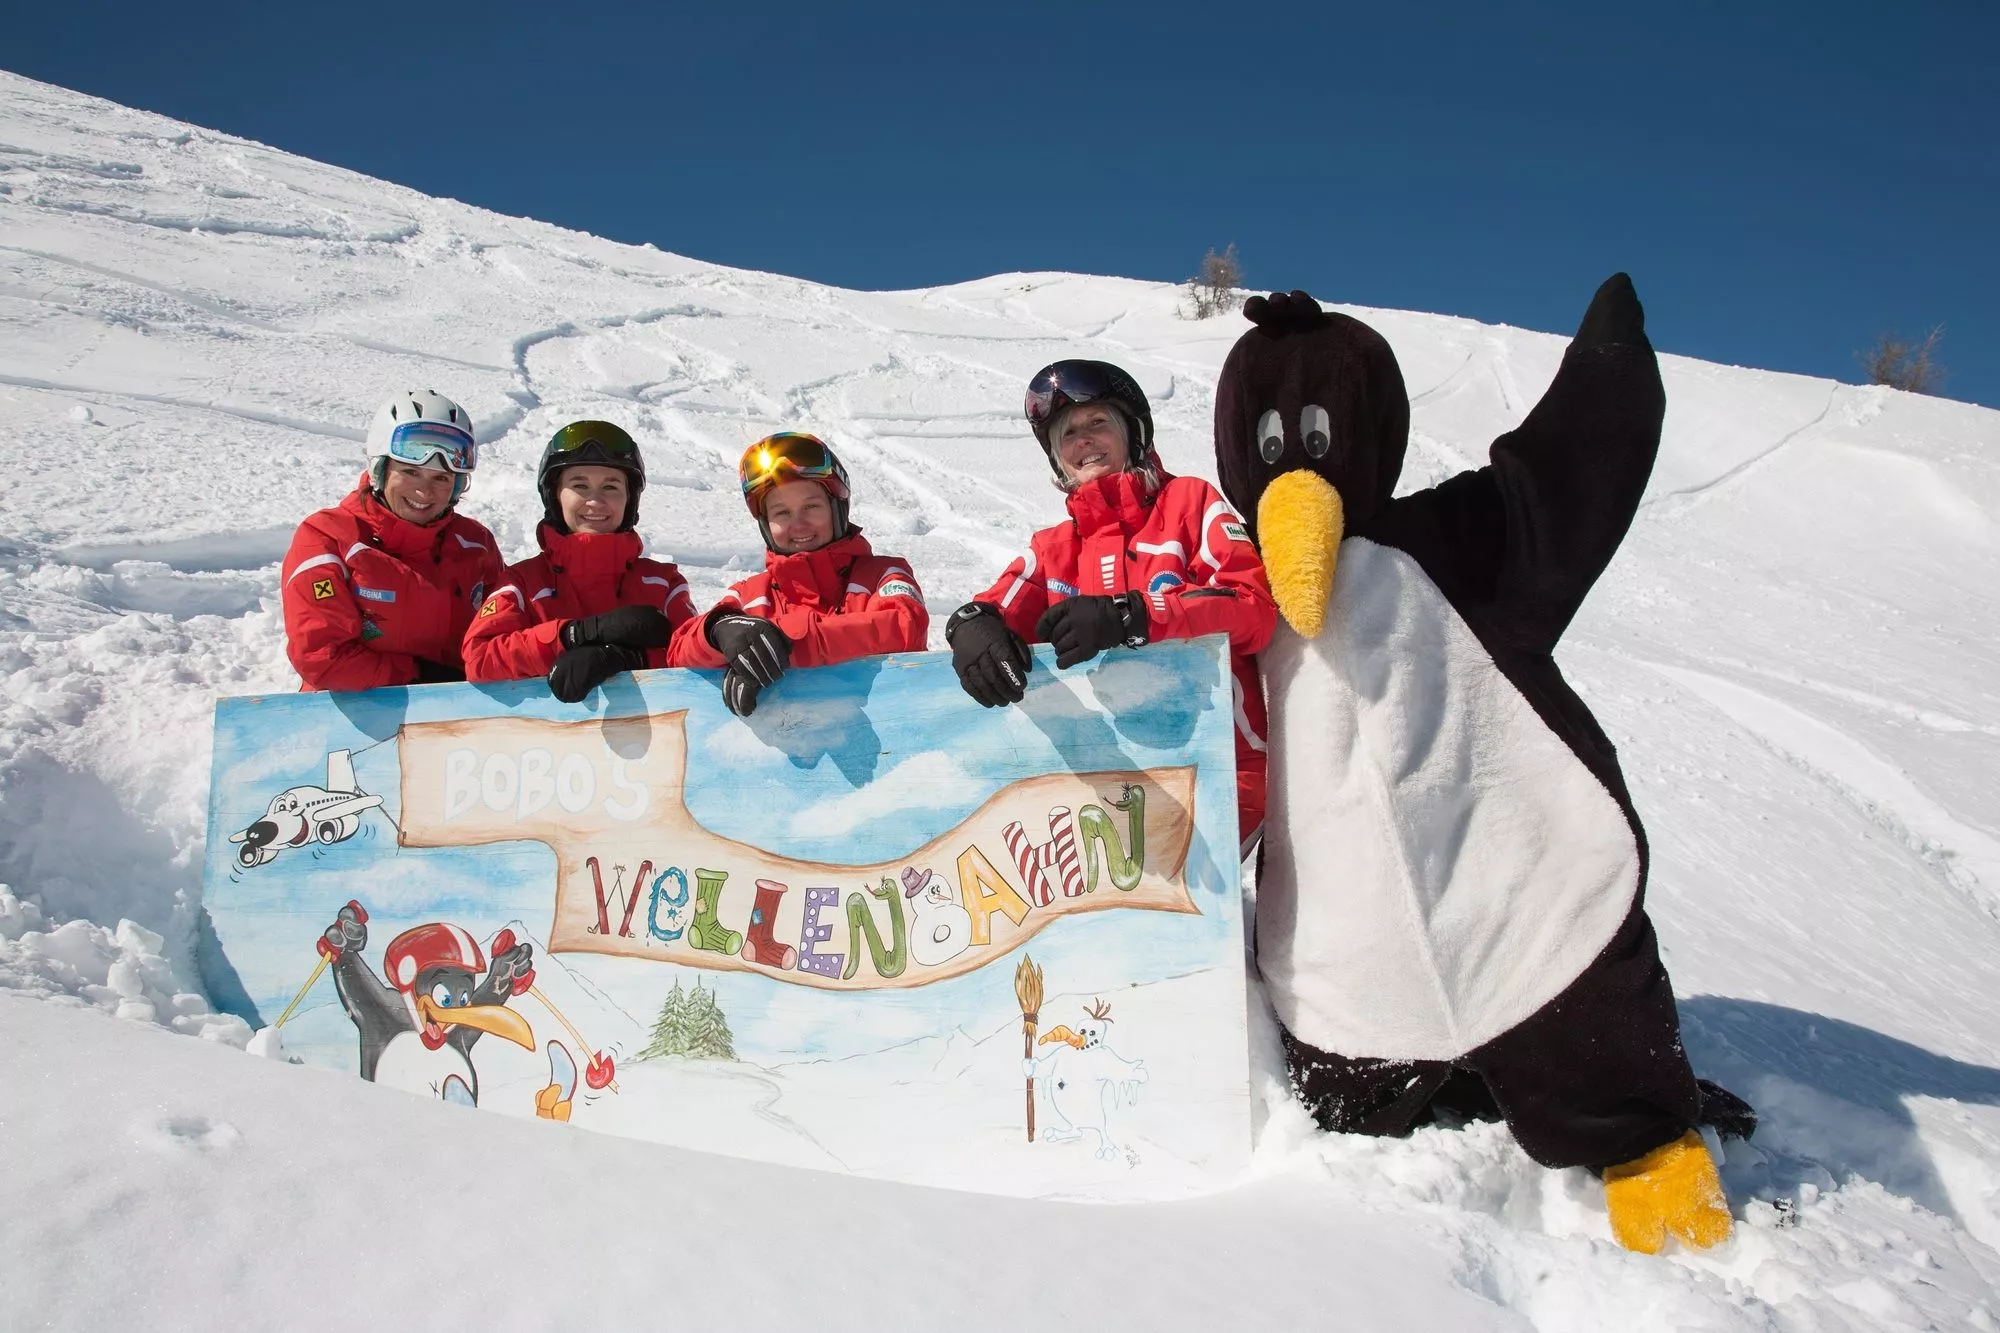 Ski School Pingvin in Serbia, Europe | Snowboarding,Skiing - Rated 0.7